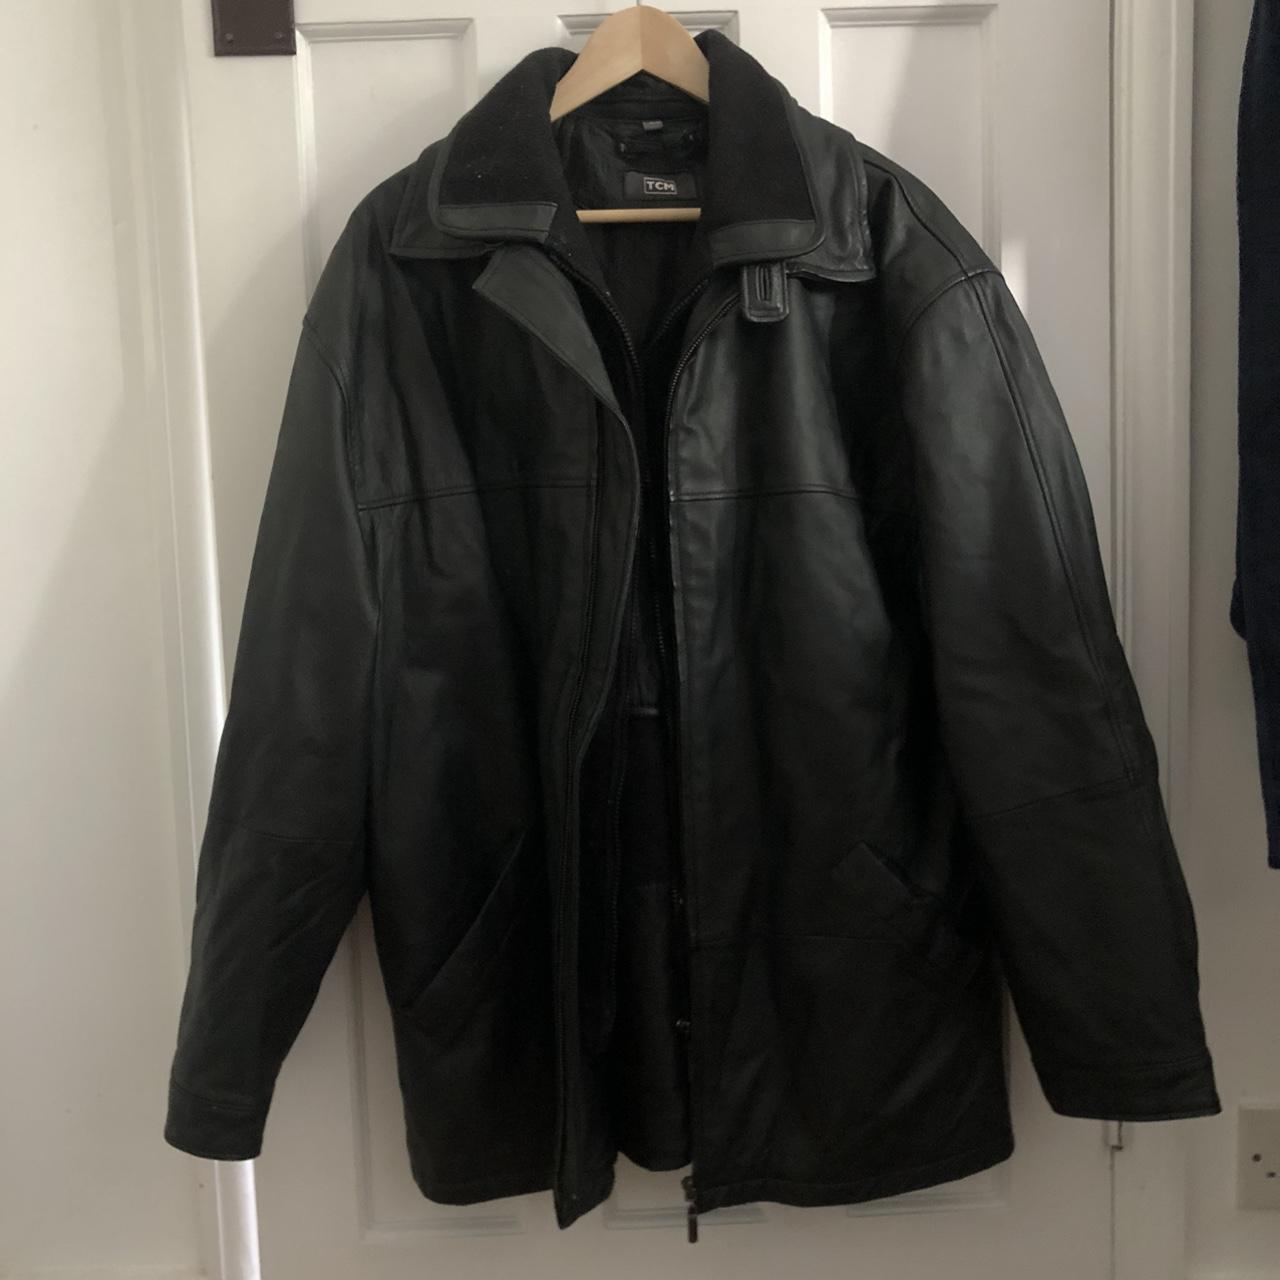 Vintage black TCM leather jacket size large, double... - Depop